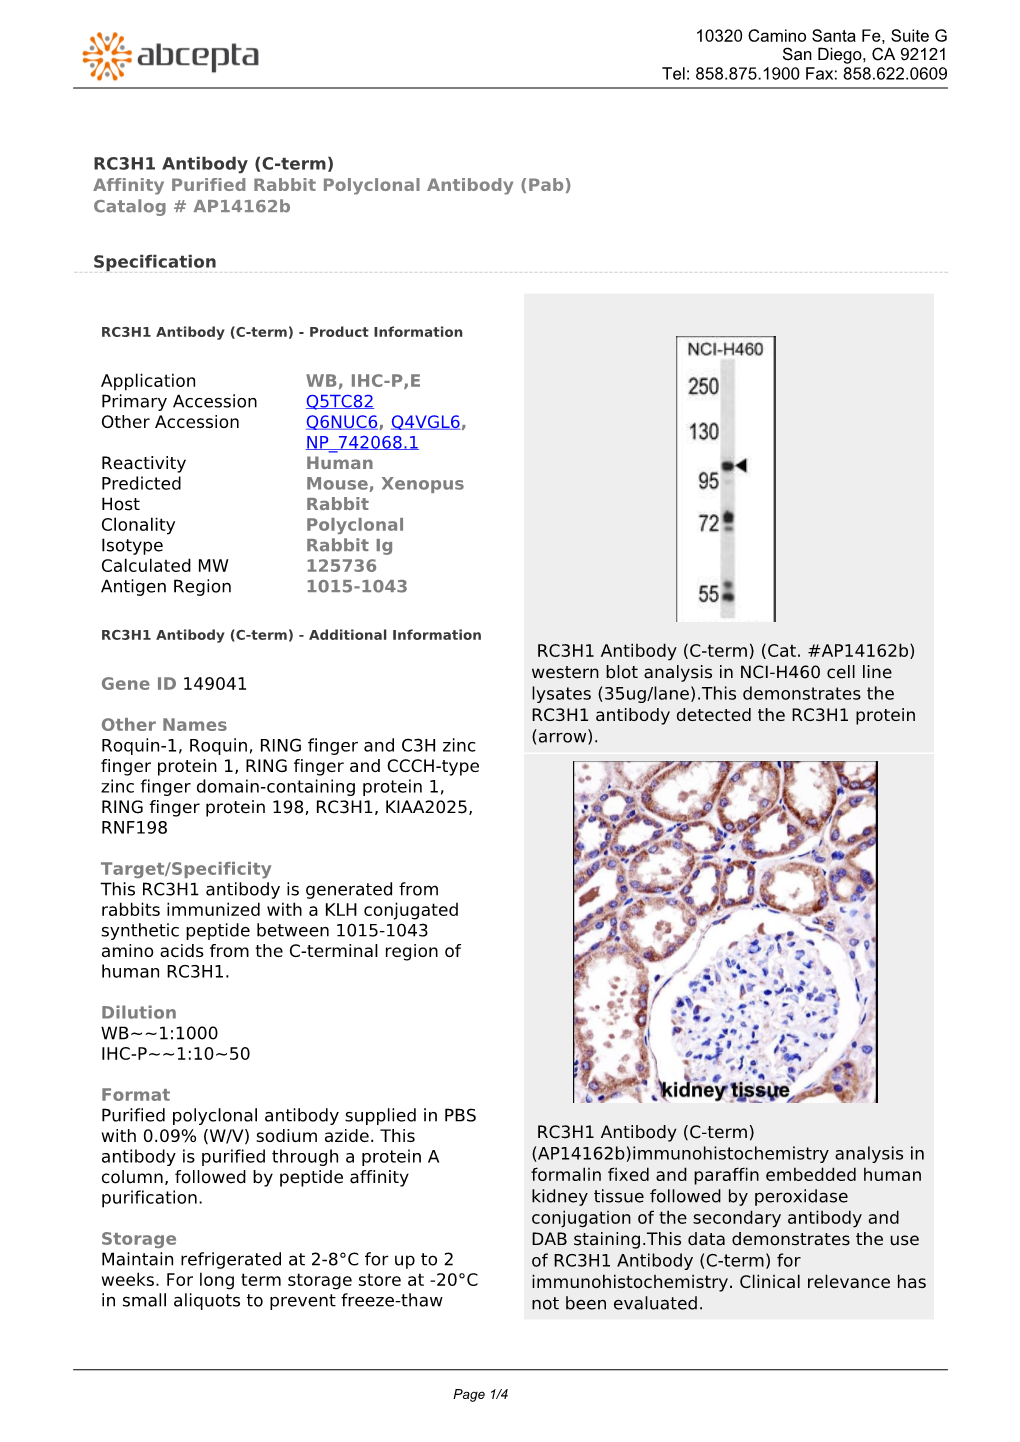 RC3H1 Antibody (C-Term) Affinity Purified Rabbit Polyclonal Antibody (Pab) Catalog # Ap14162b